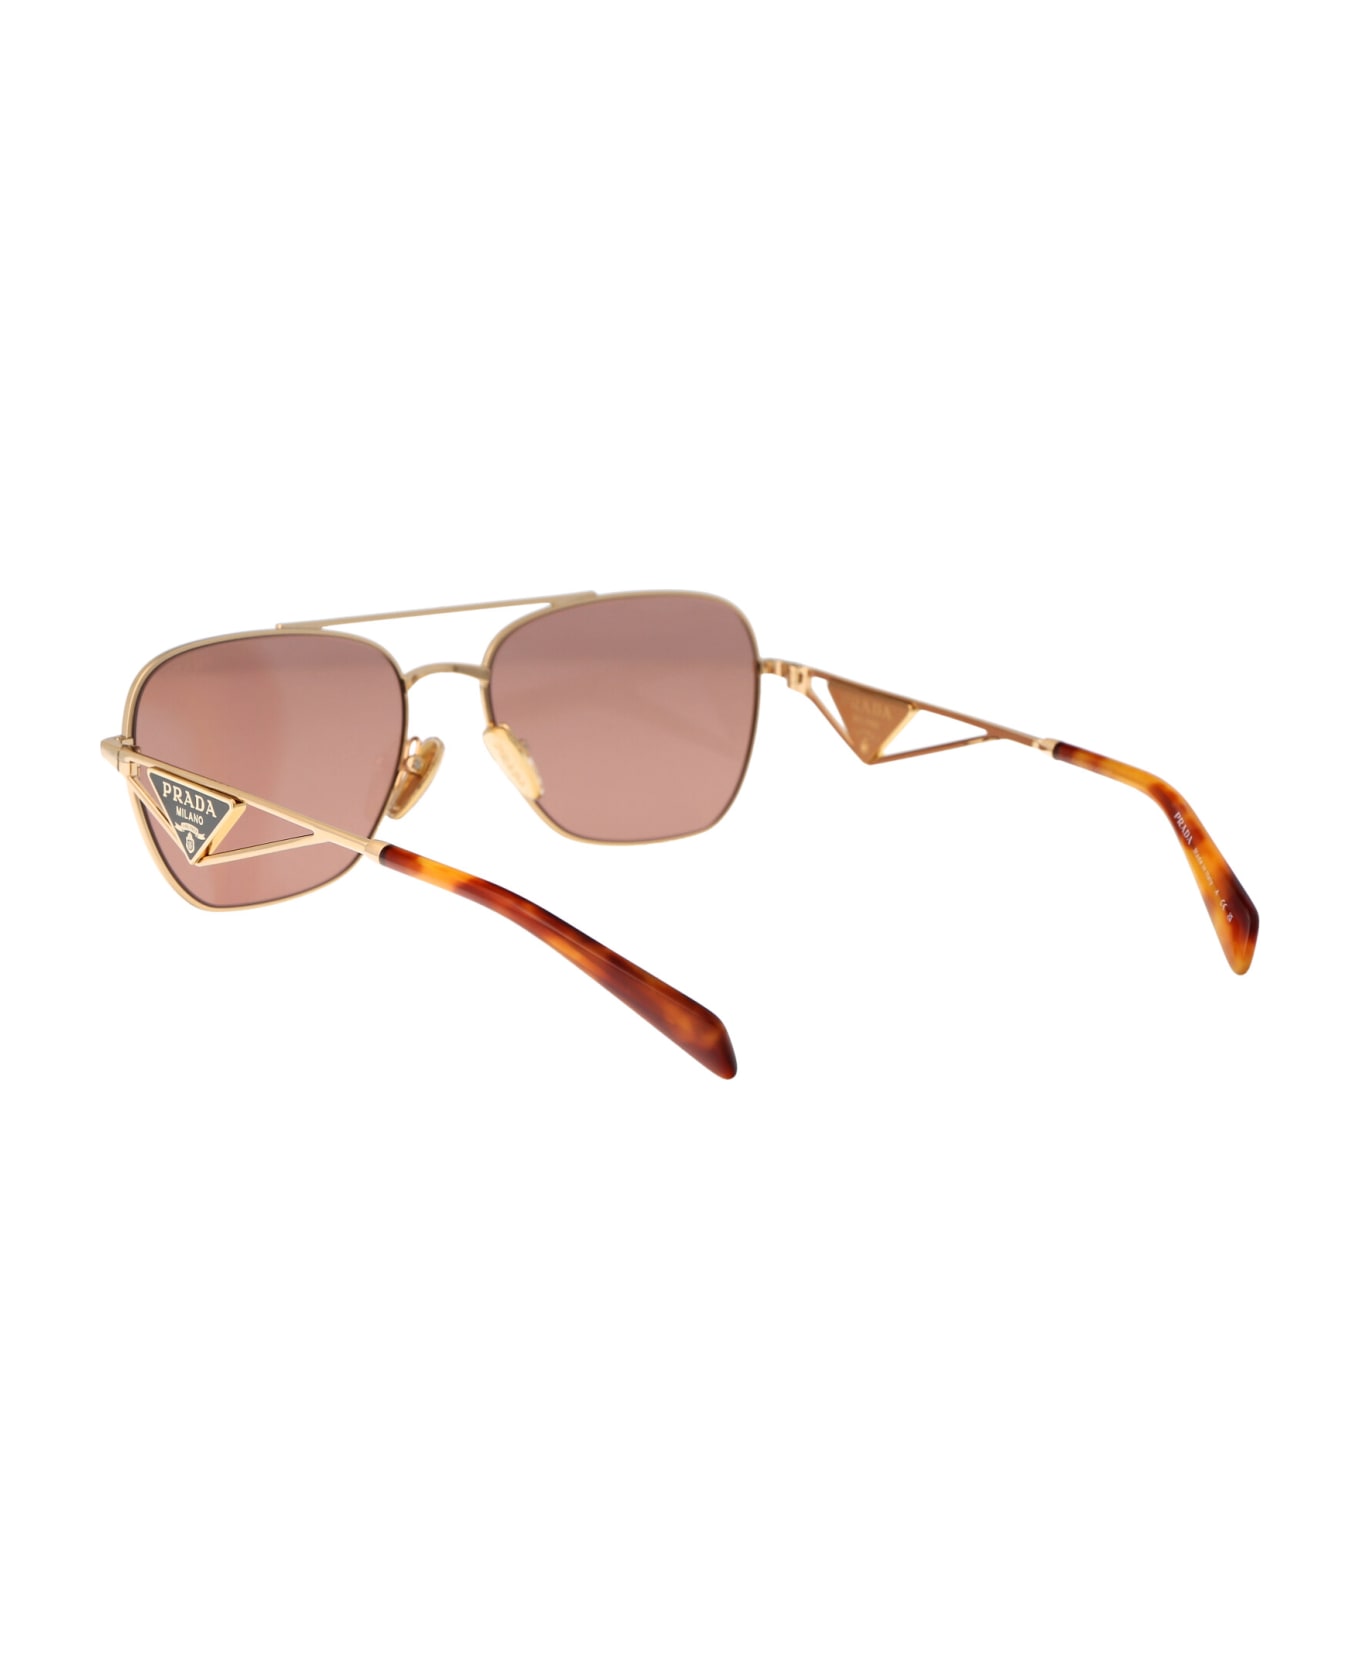 Prada Eyewear 0pr A50s Sunglasses - 5AK08M Gold